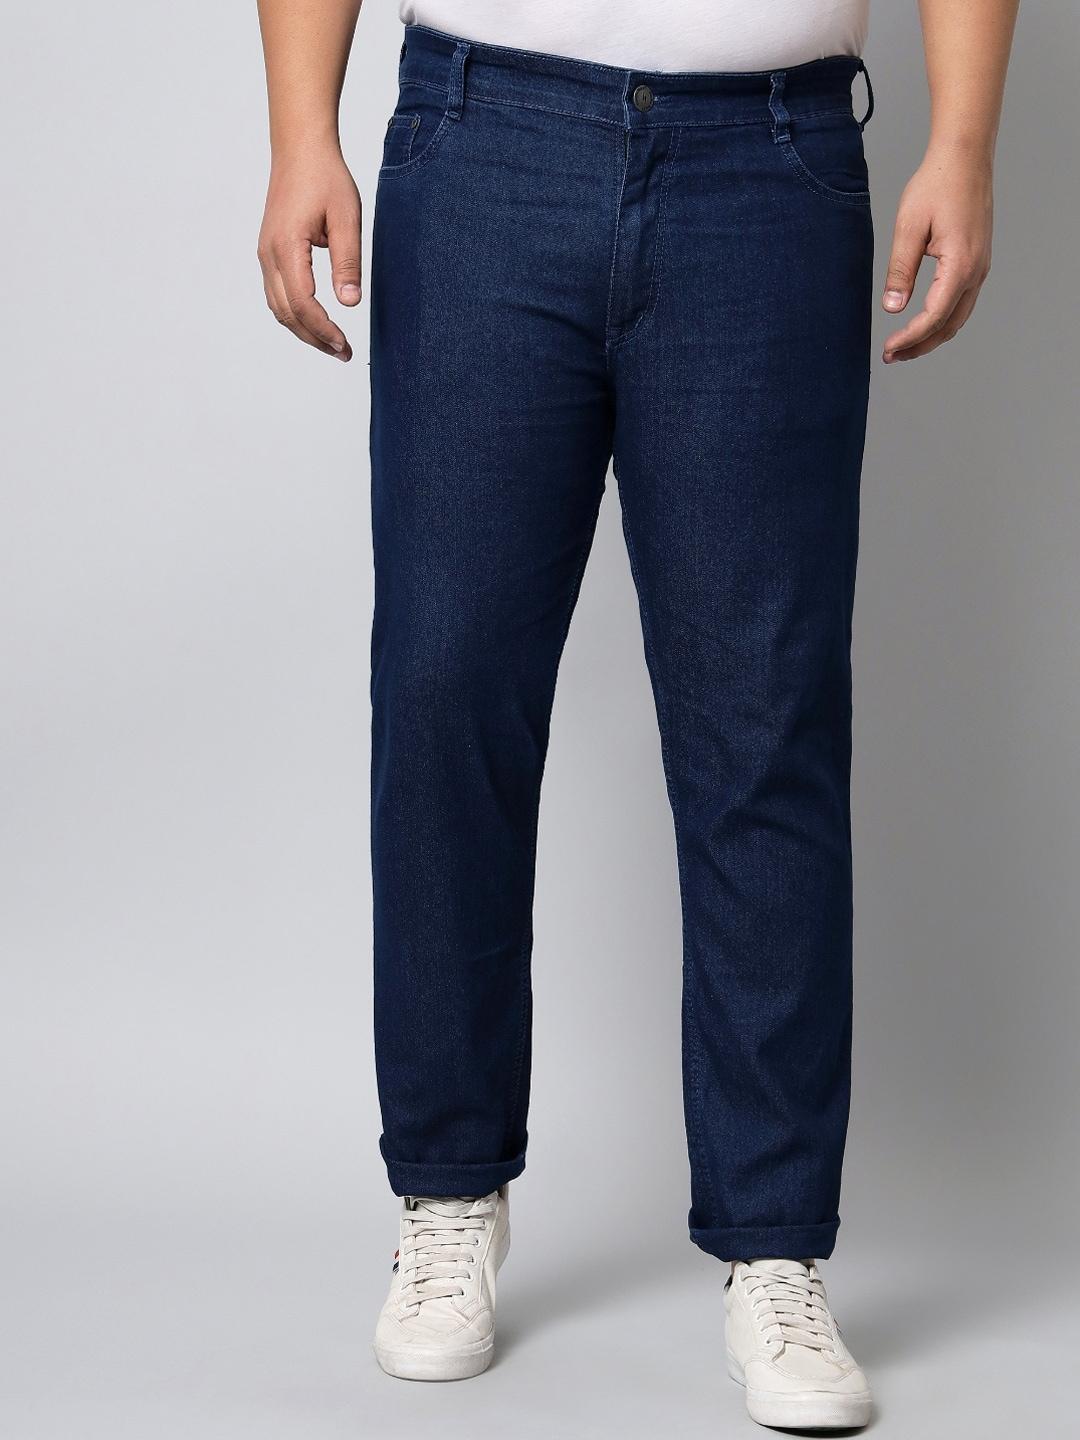 STUDIO NEXX Men Clean Look Mid Rise Slim Fit Stretchable Jeans